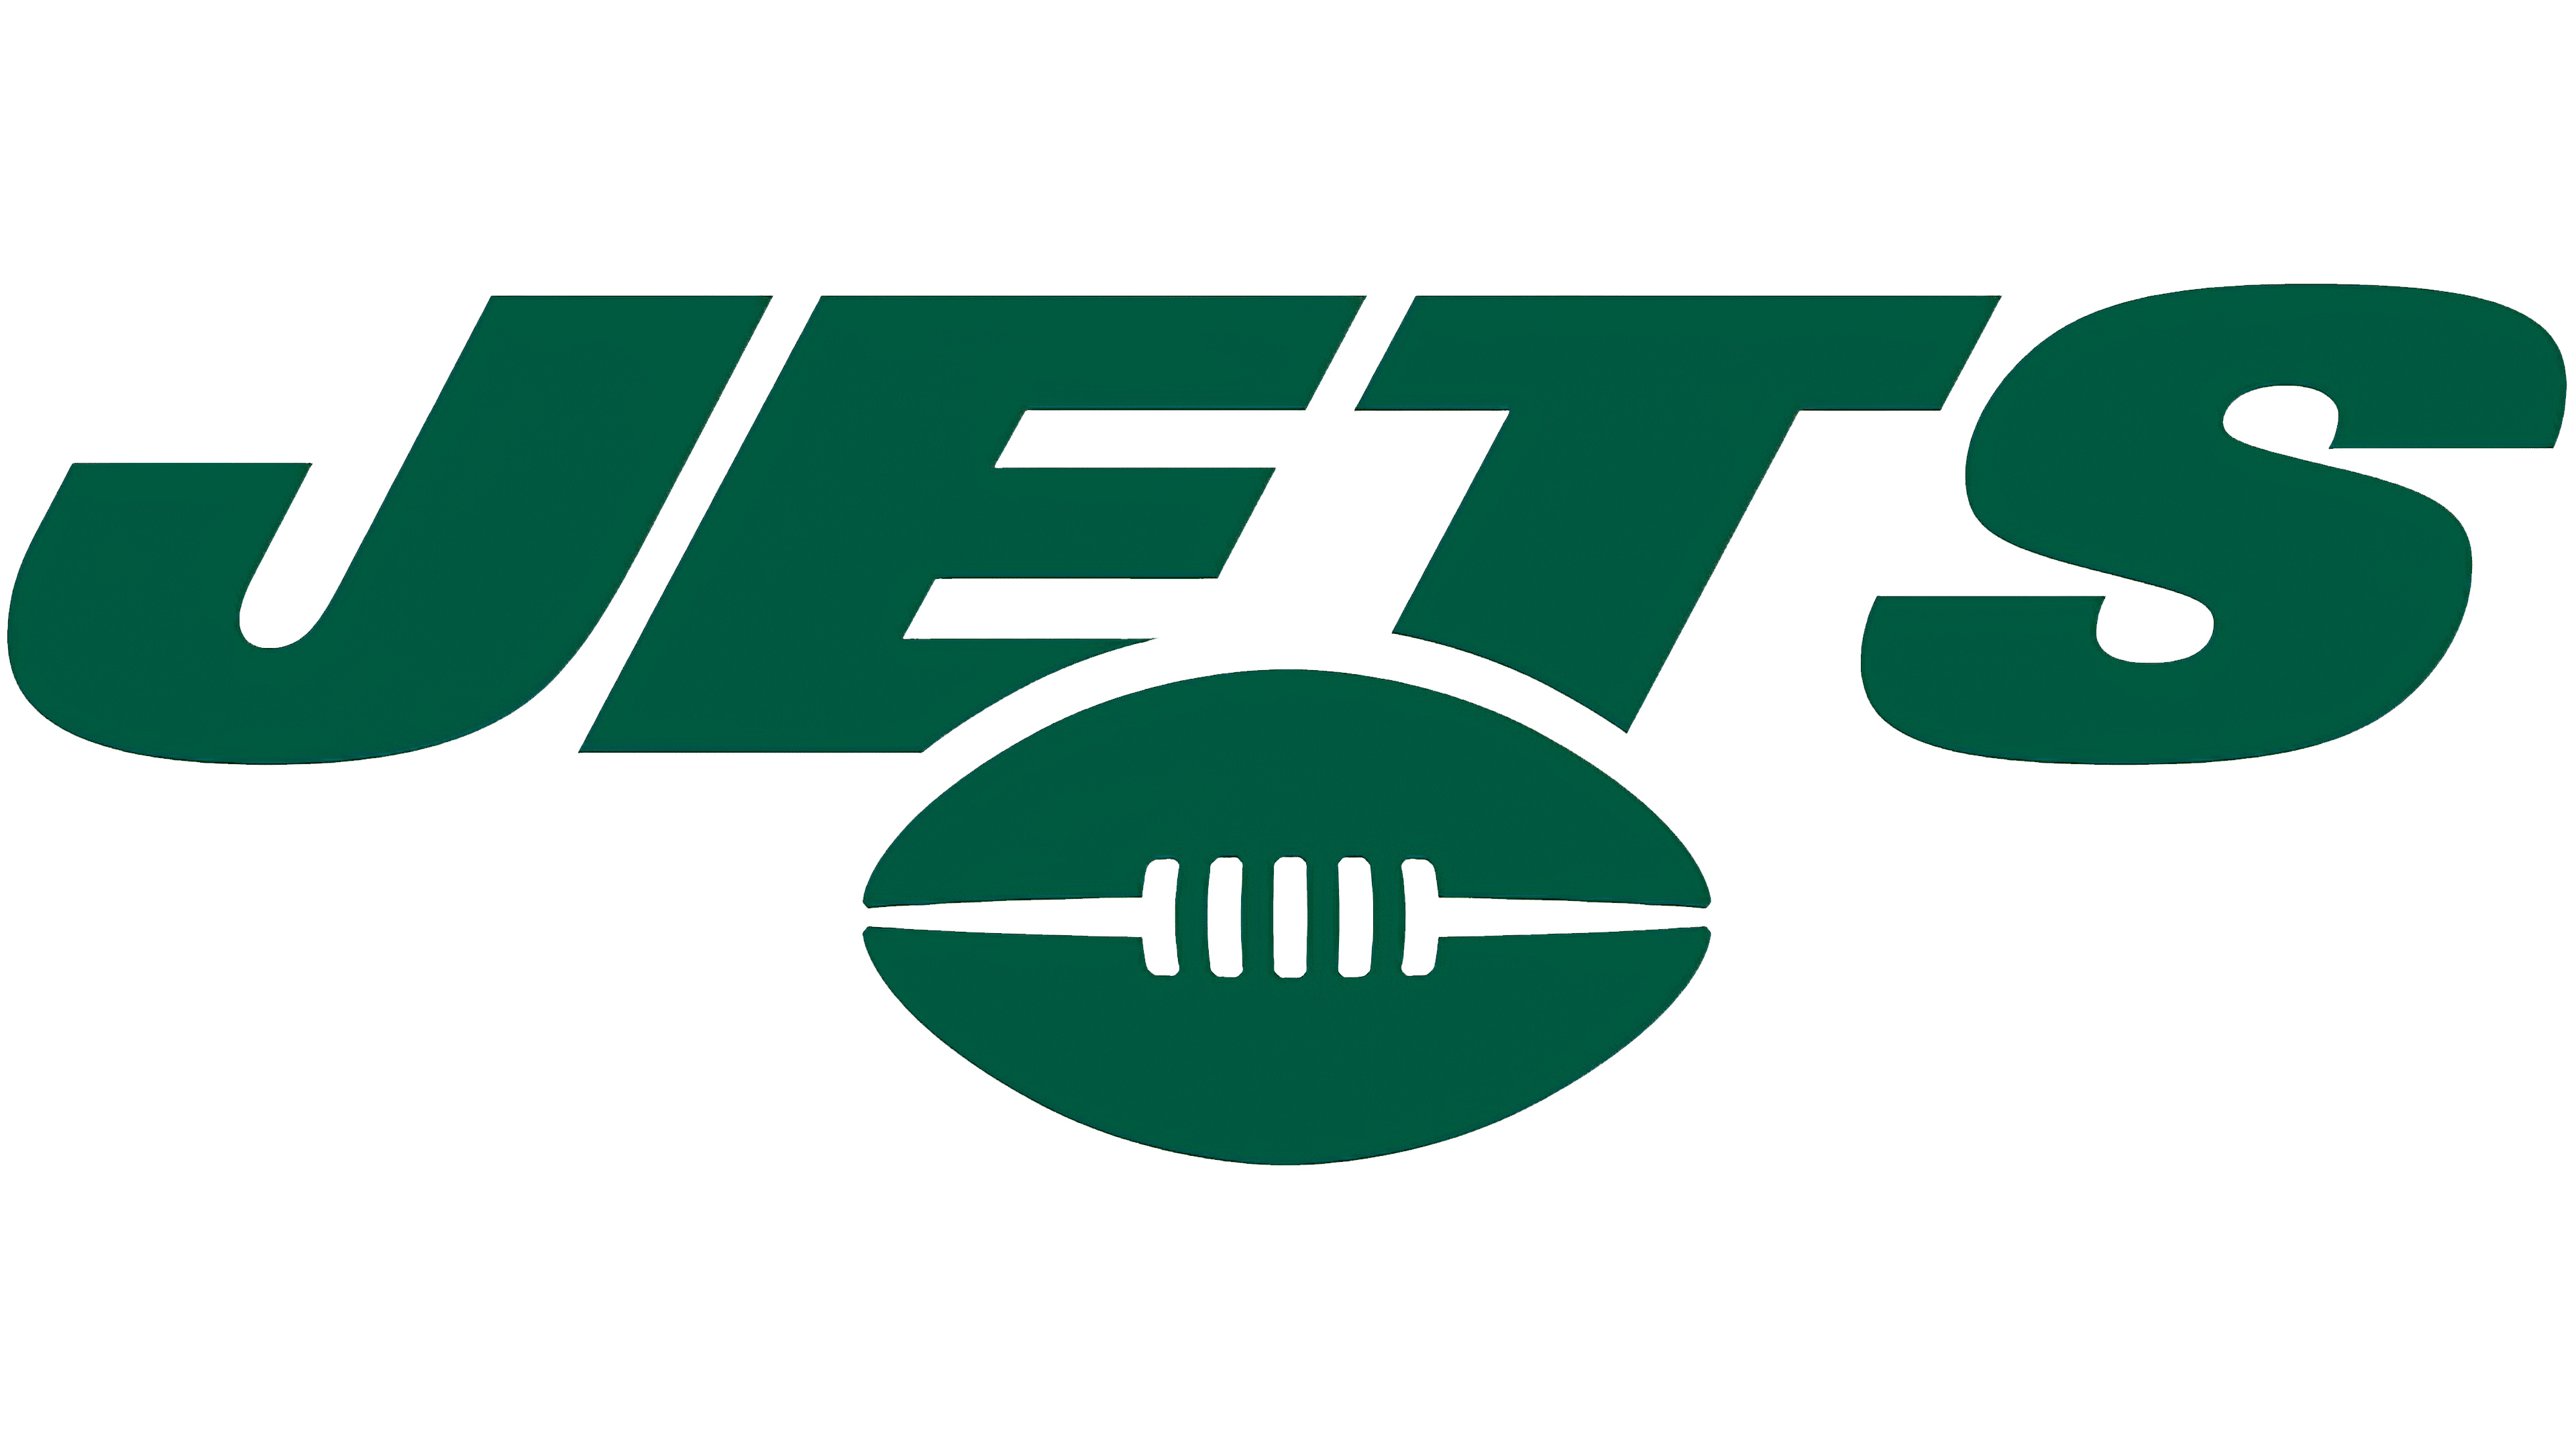 New York Jets, Logo meaning, Team history, Sports team, 3840x2160 4K Desktop